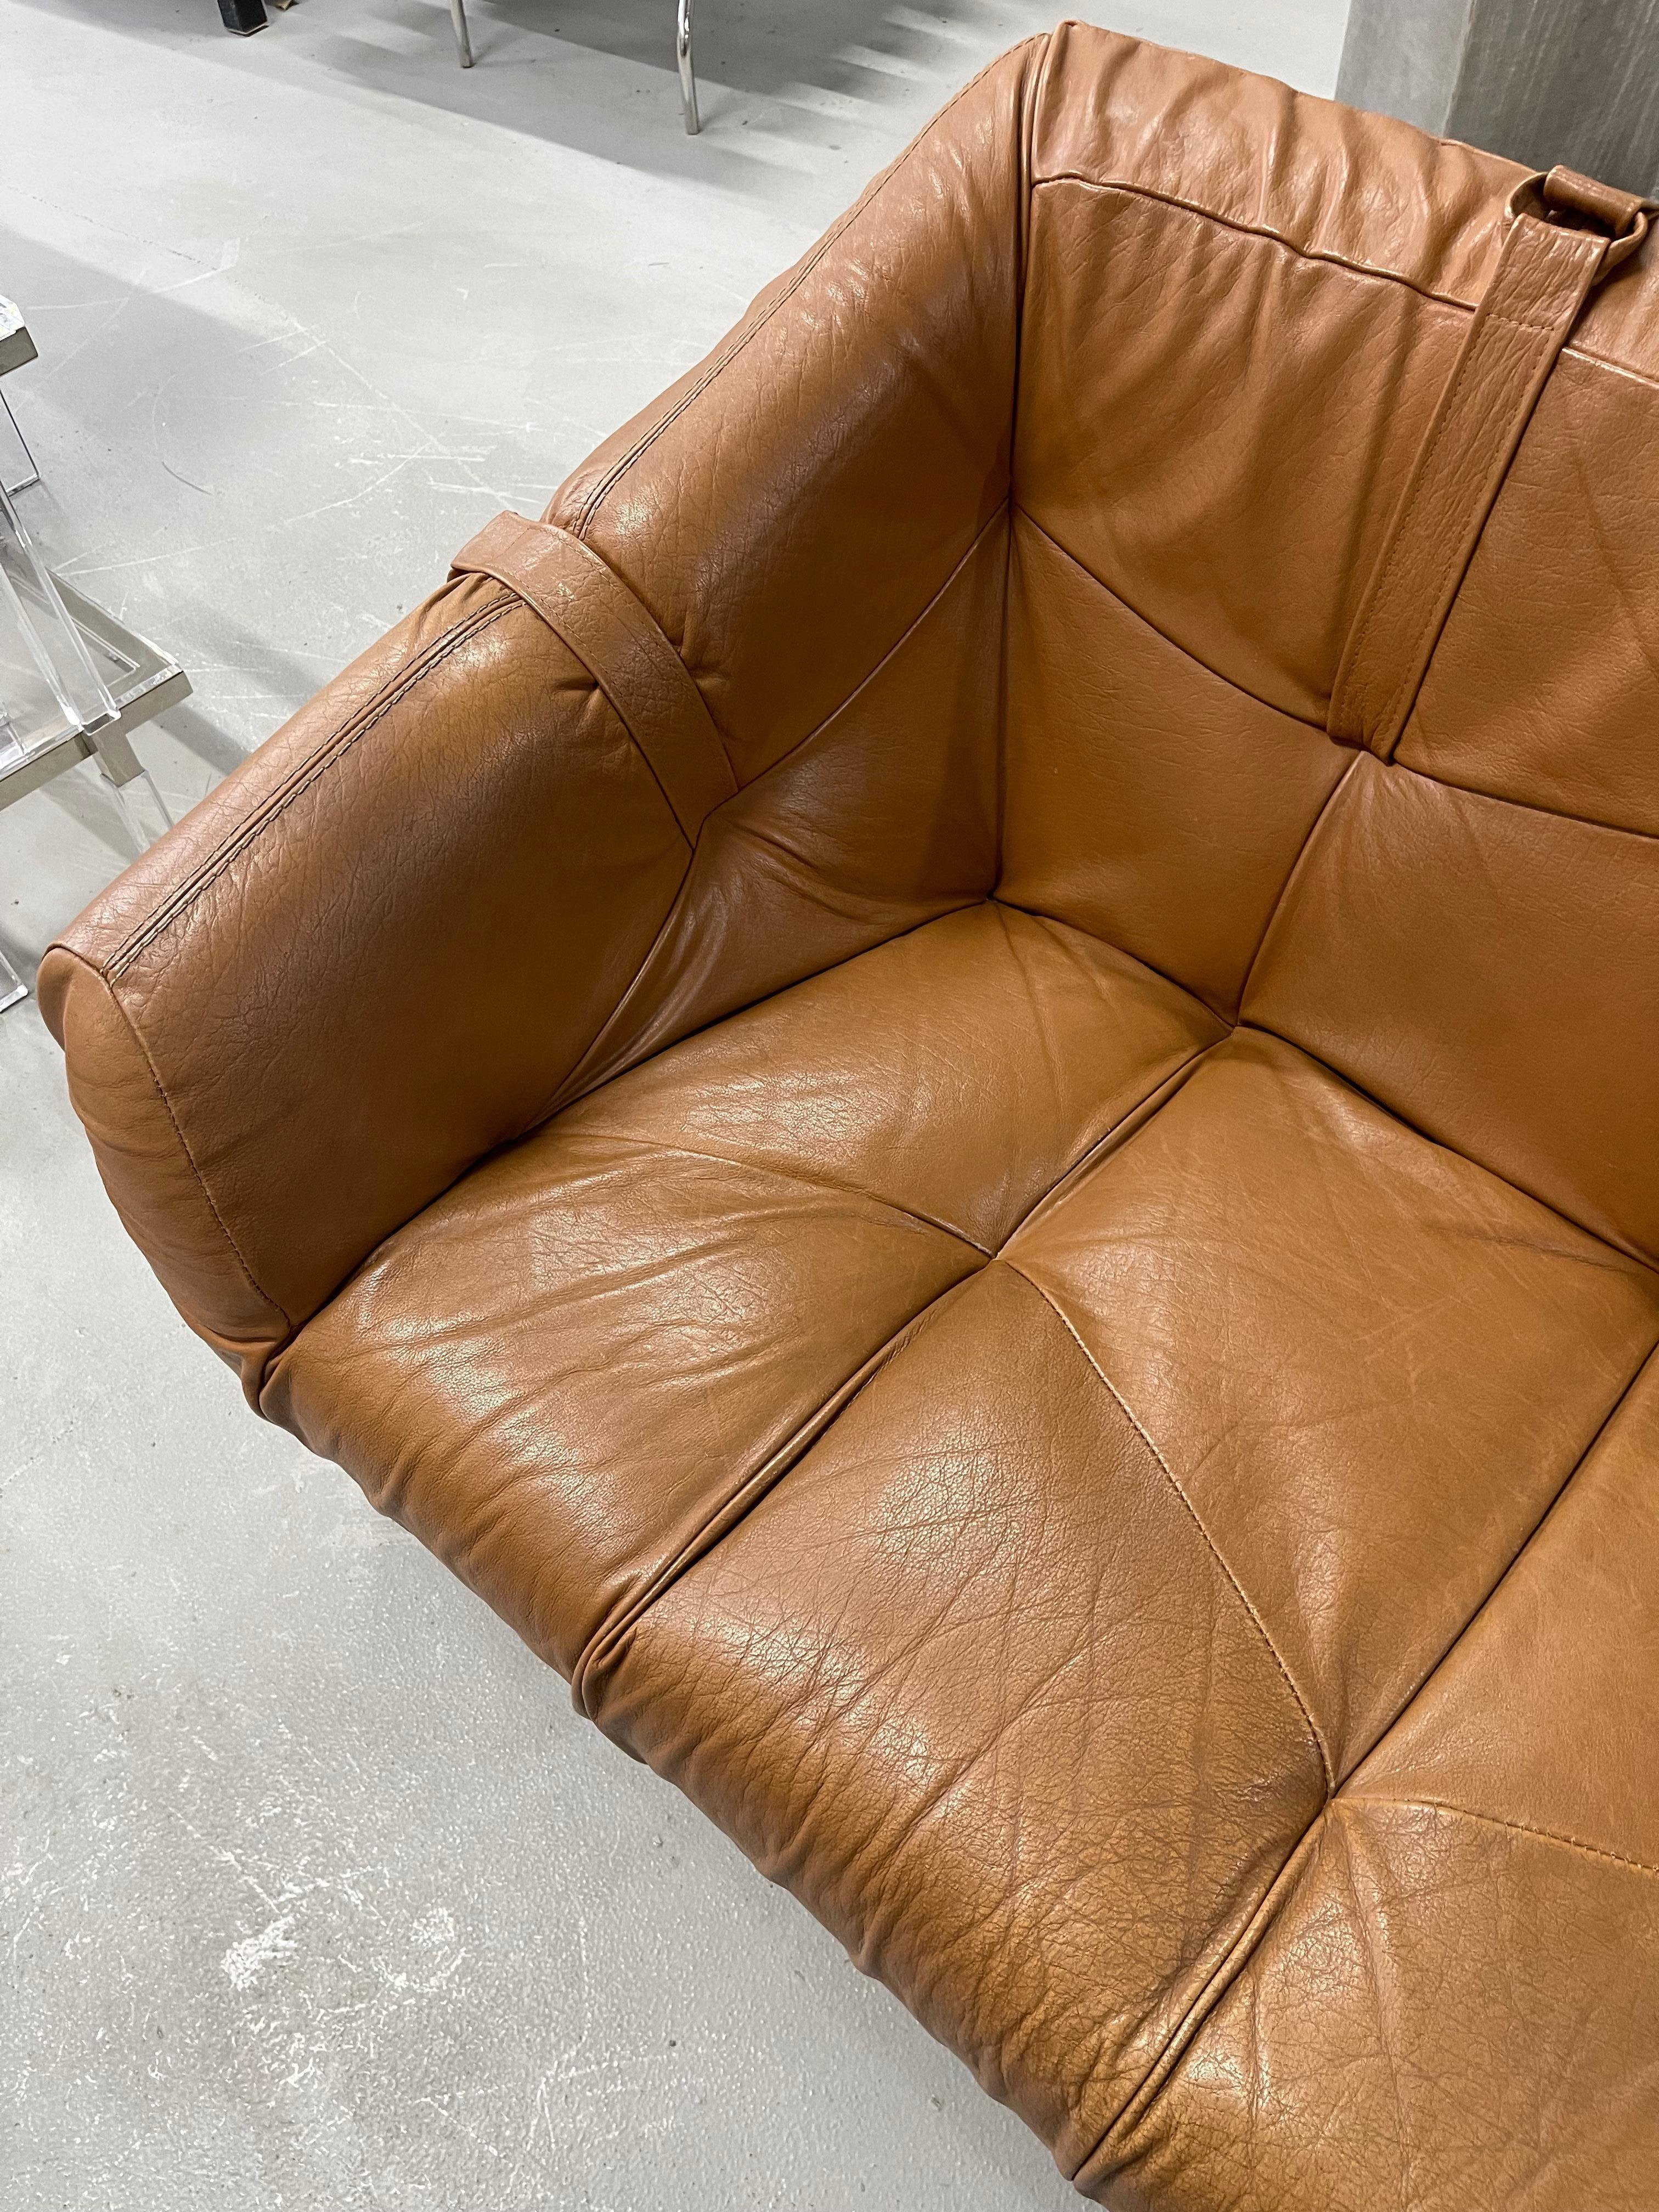 Percival Lafer Brazilian Rosewood Leather Sofa 7